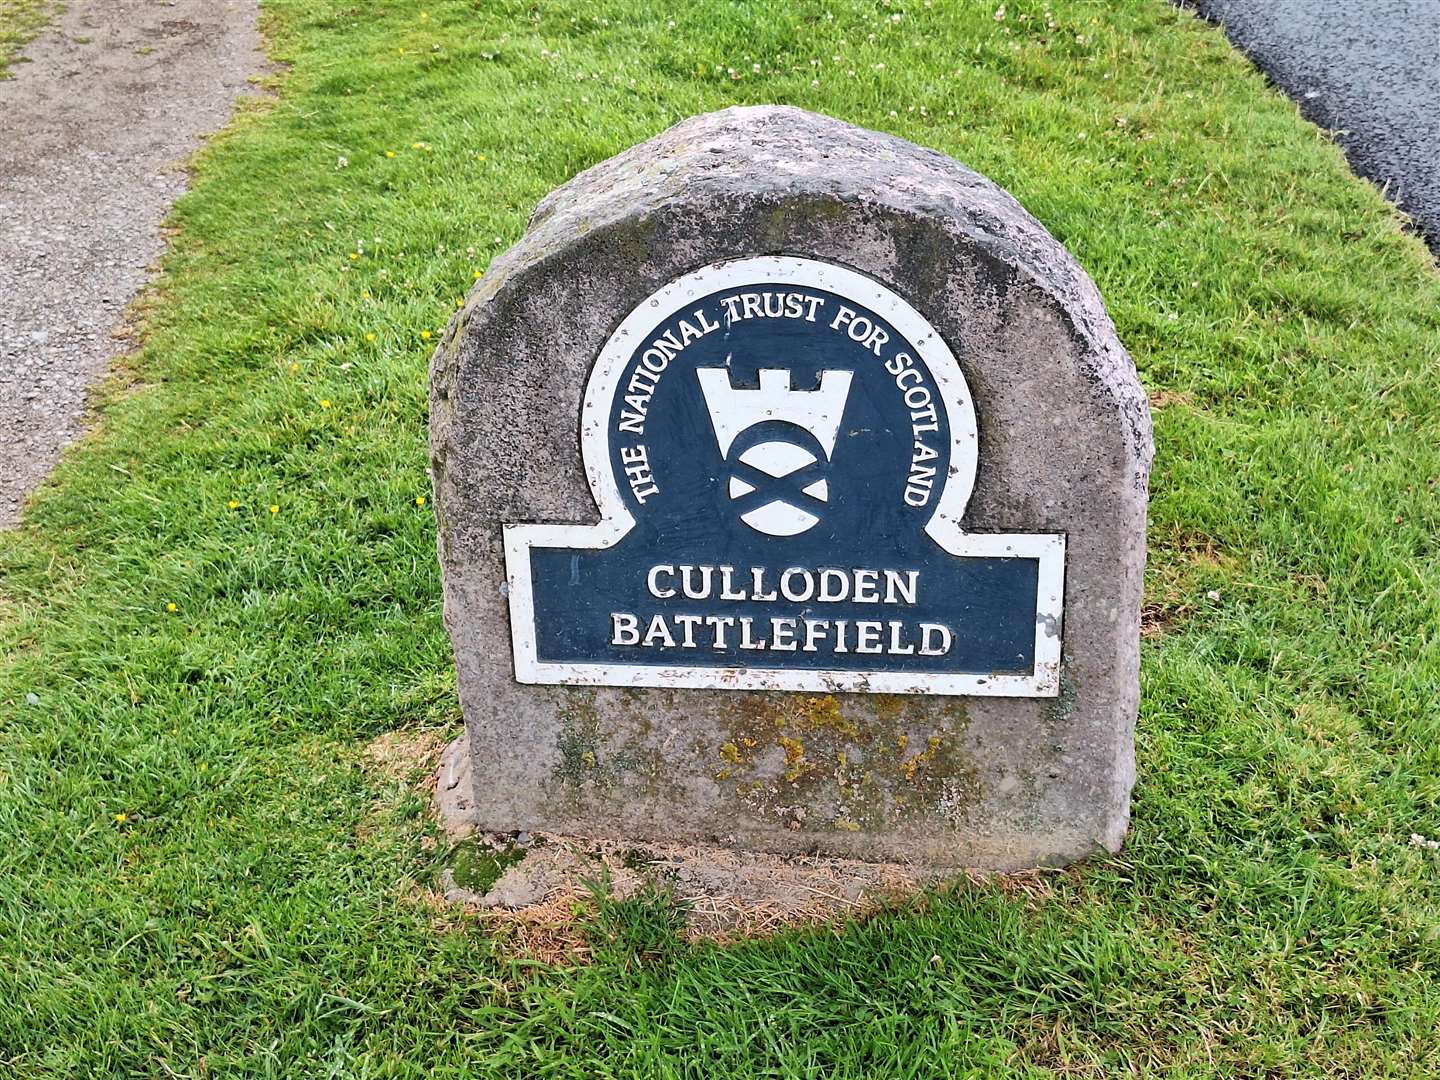 National Trust for Scotland marker for Culloden Battlefield.